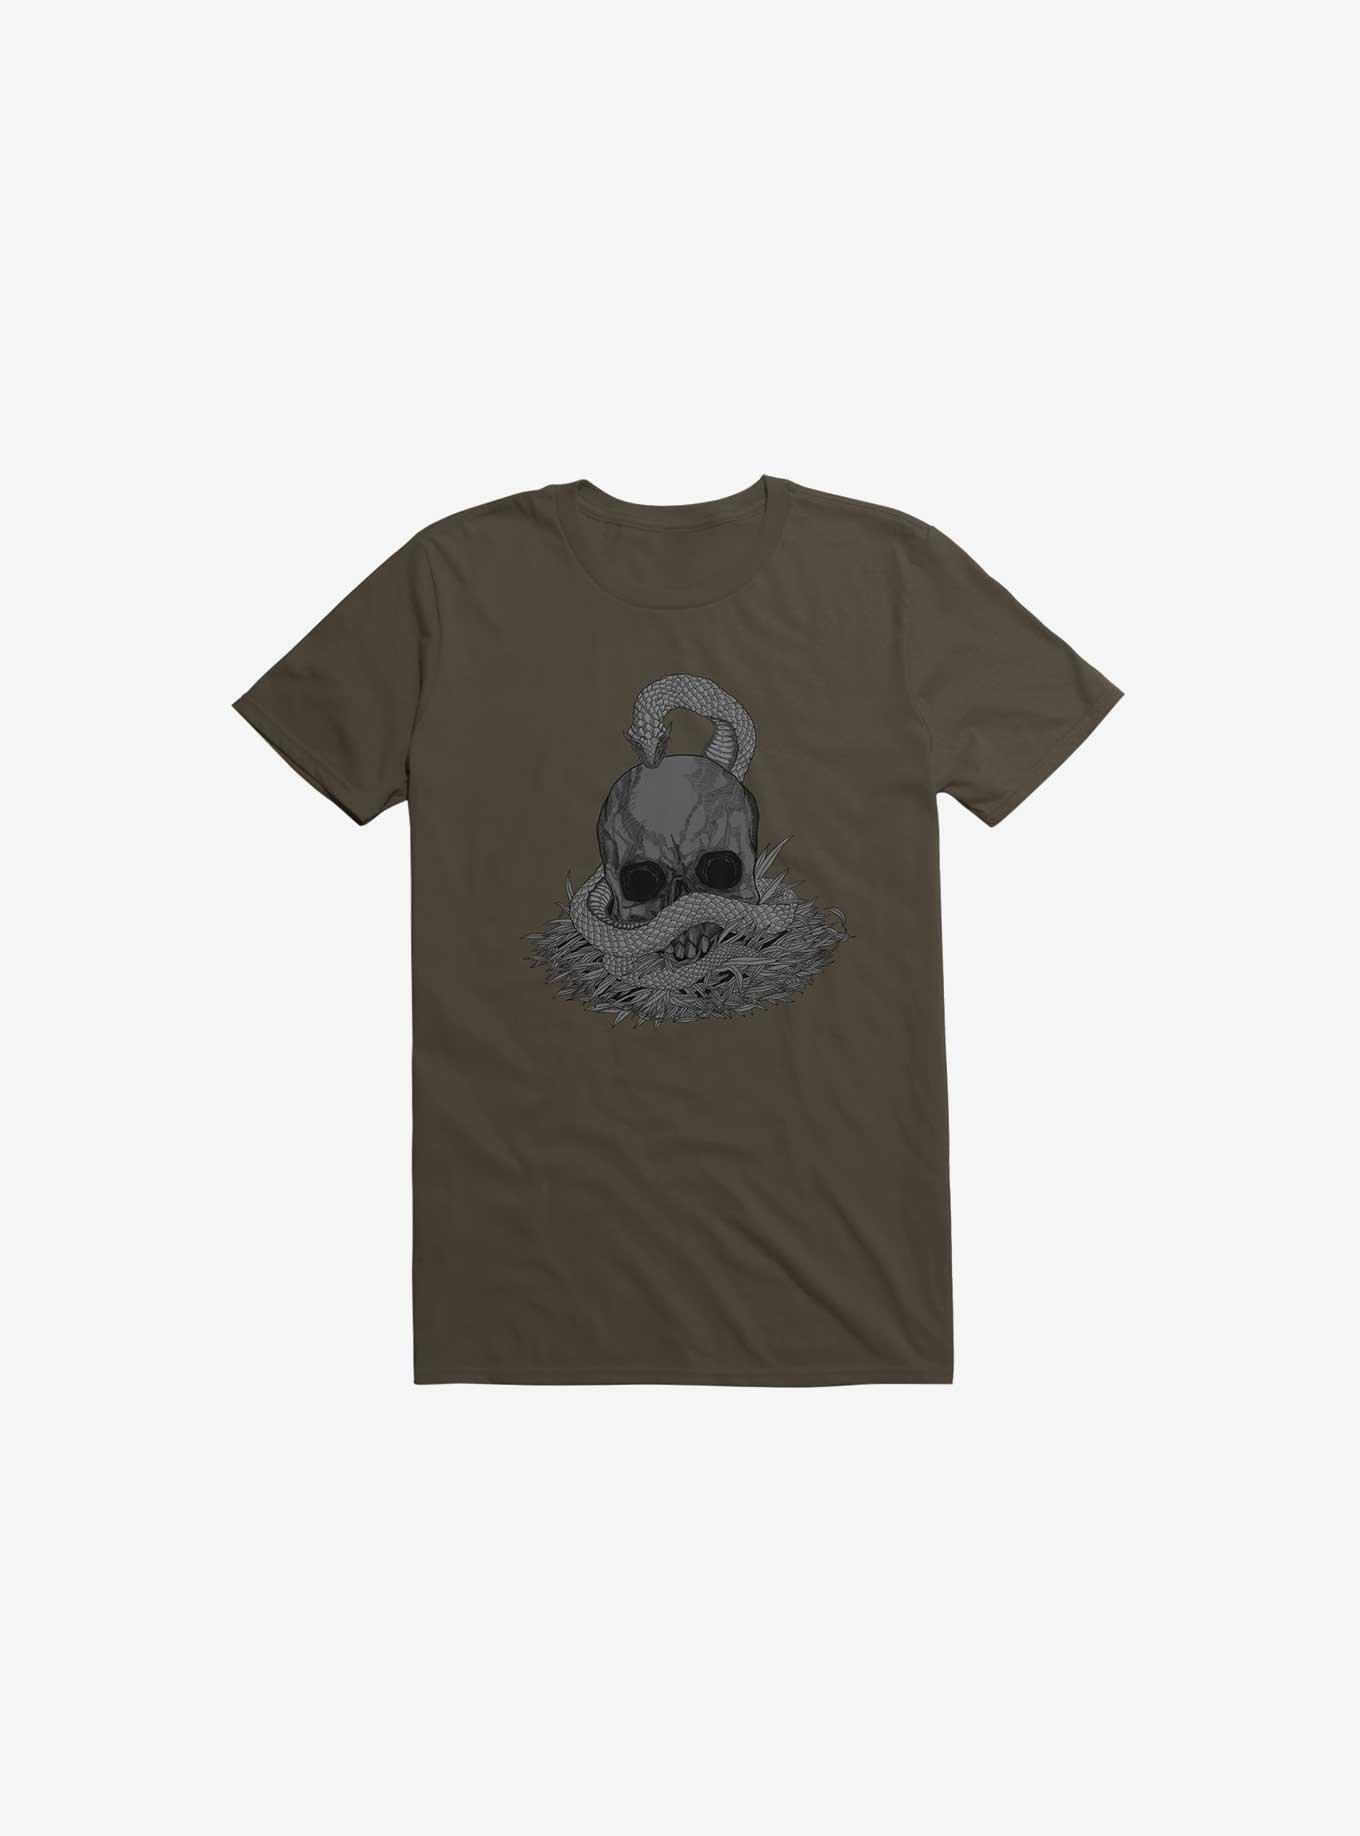 Snake & Skull Brown T-Shirt, BROWN, hi-res